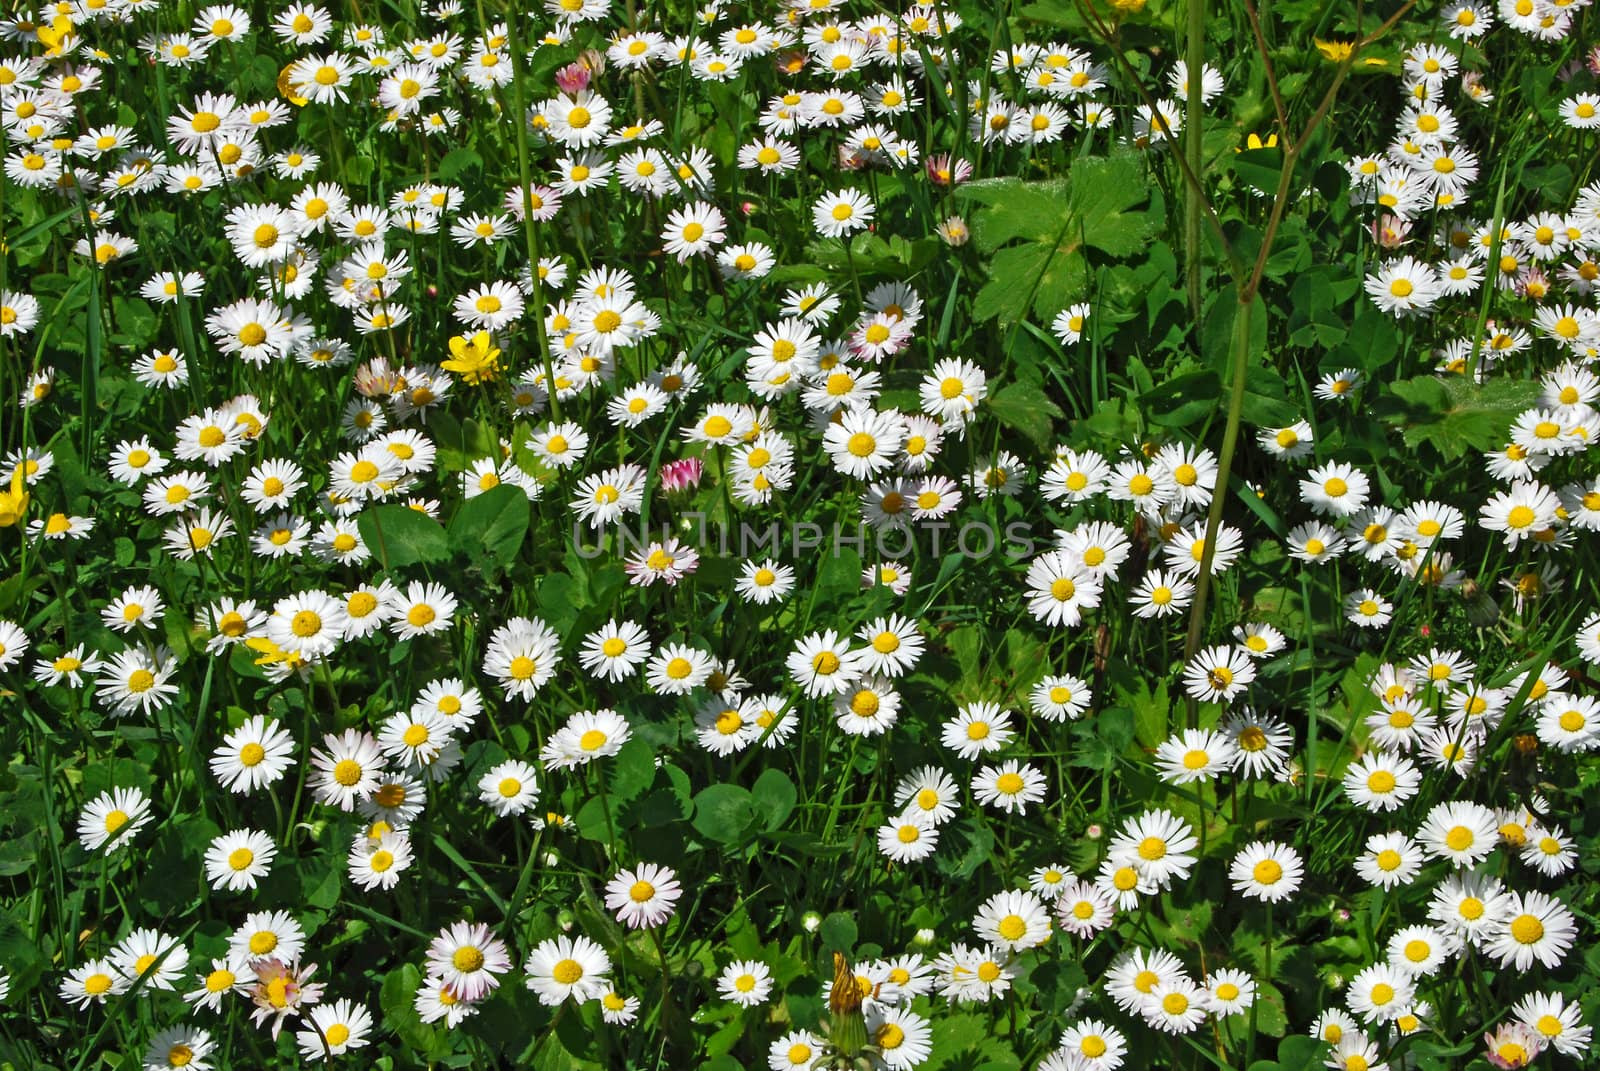 Daisy and clover field by varbenov